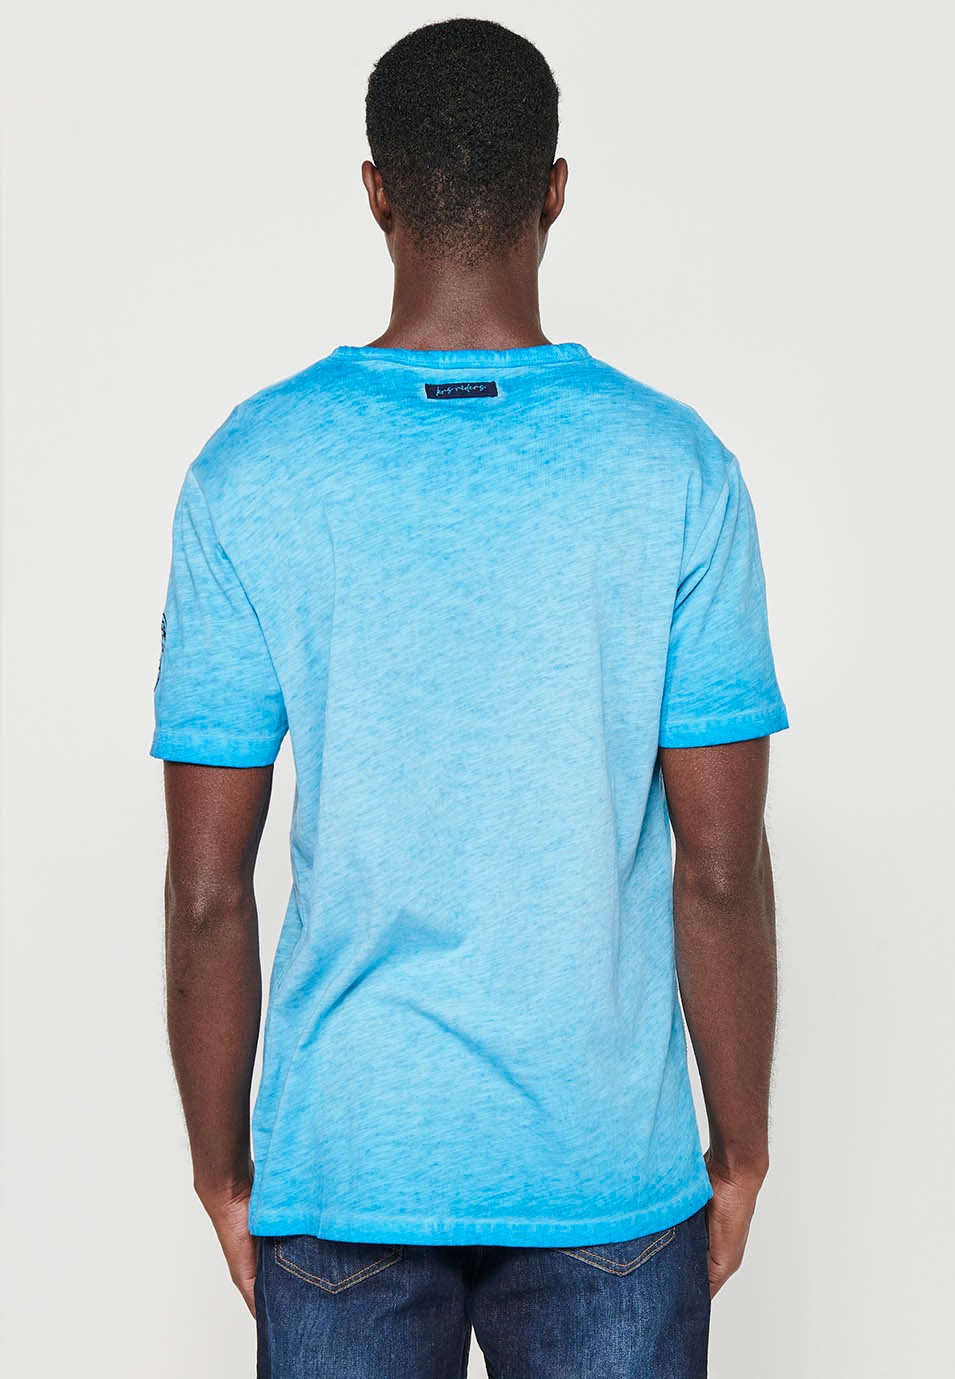 Short-sleeved cotton t-shirt, V-neck with button decoration, blue color for men 2